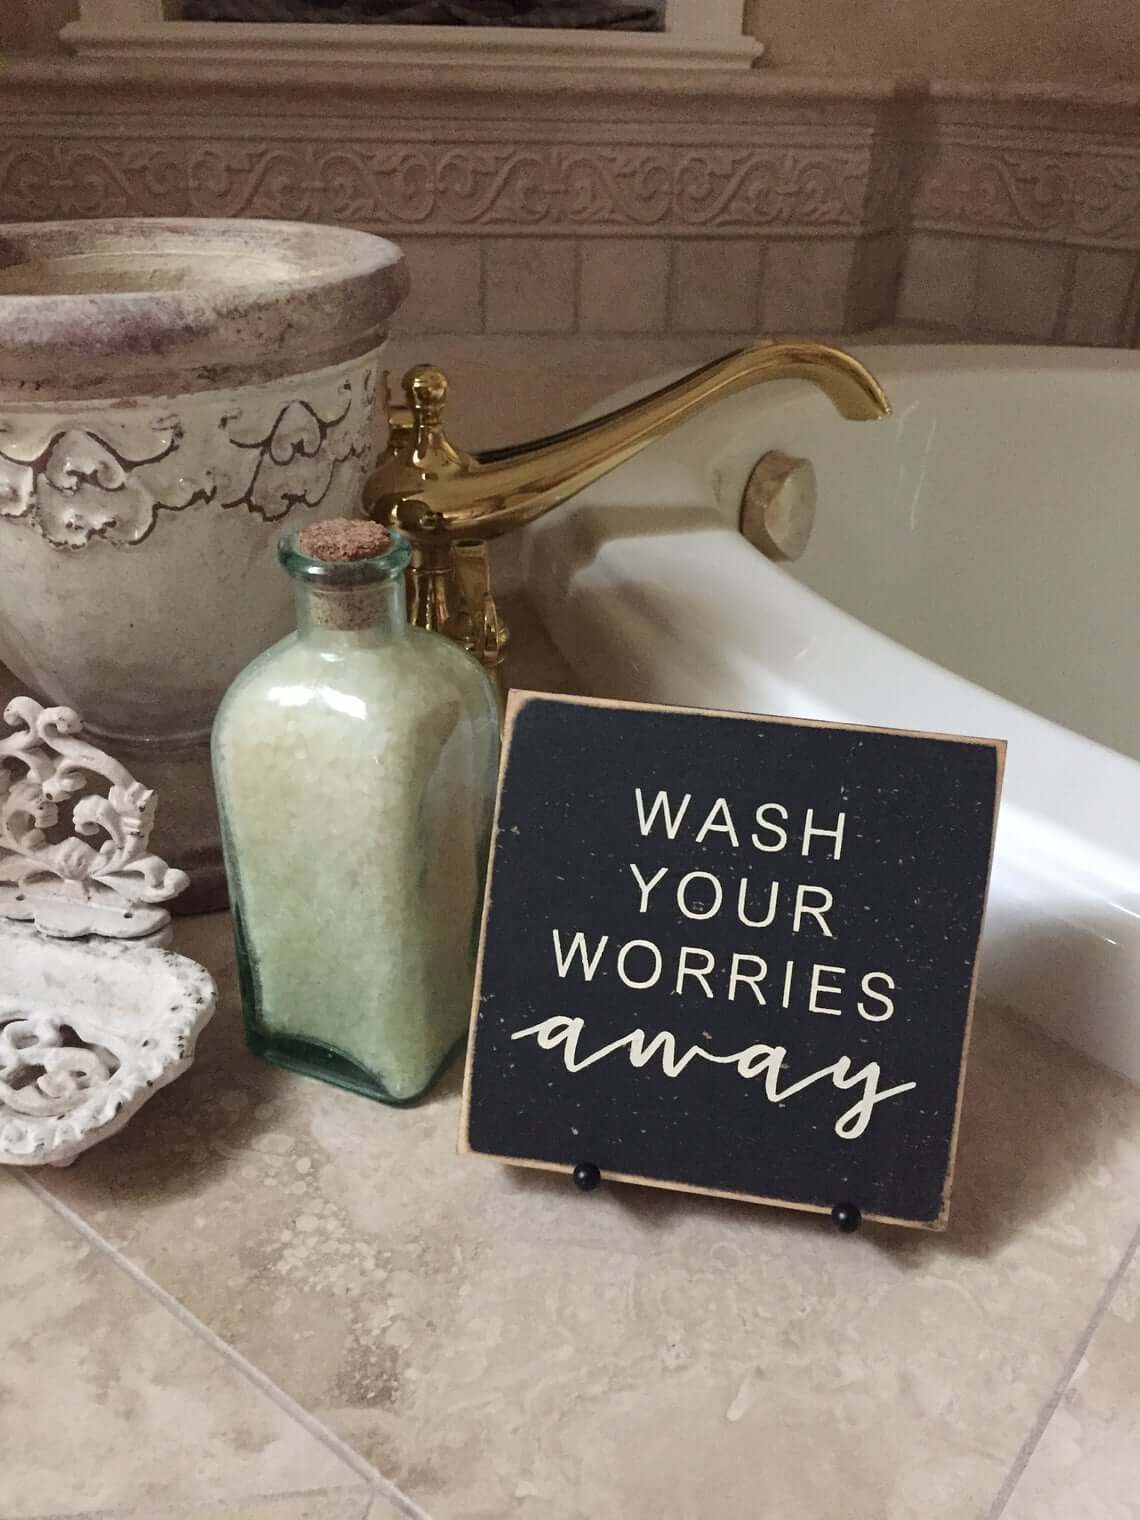 Wash Your Worries Down the Drain Bathroom Decor